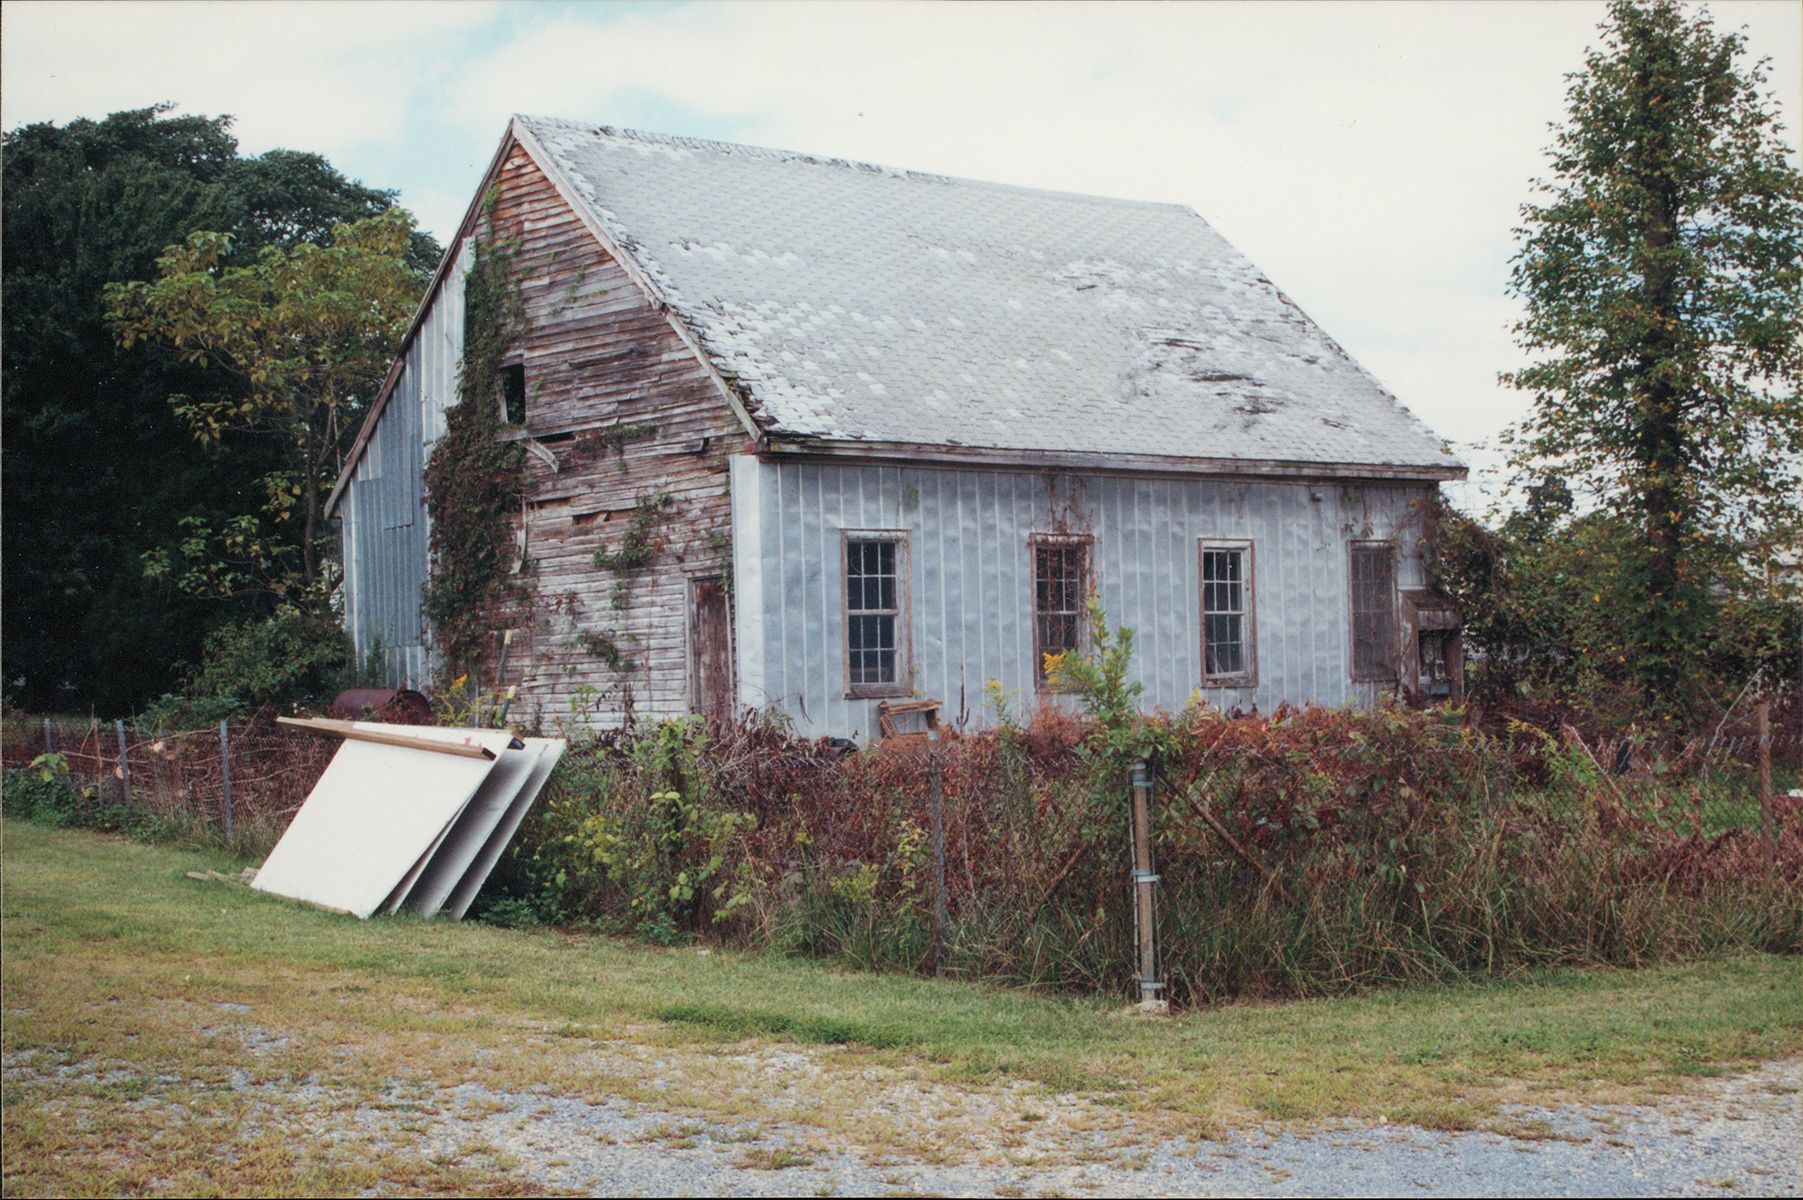 A view of a historic barn near Denton, Maryland.